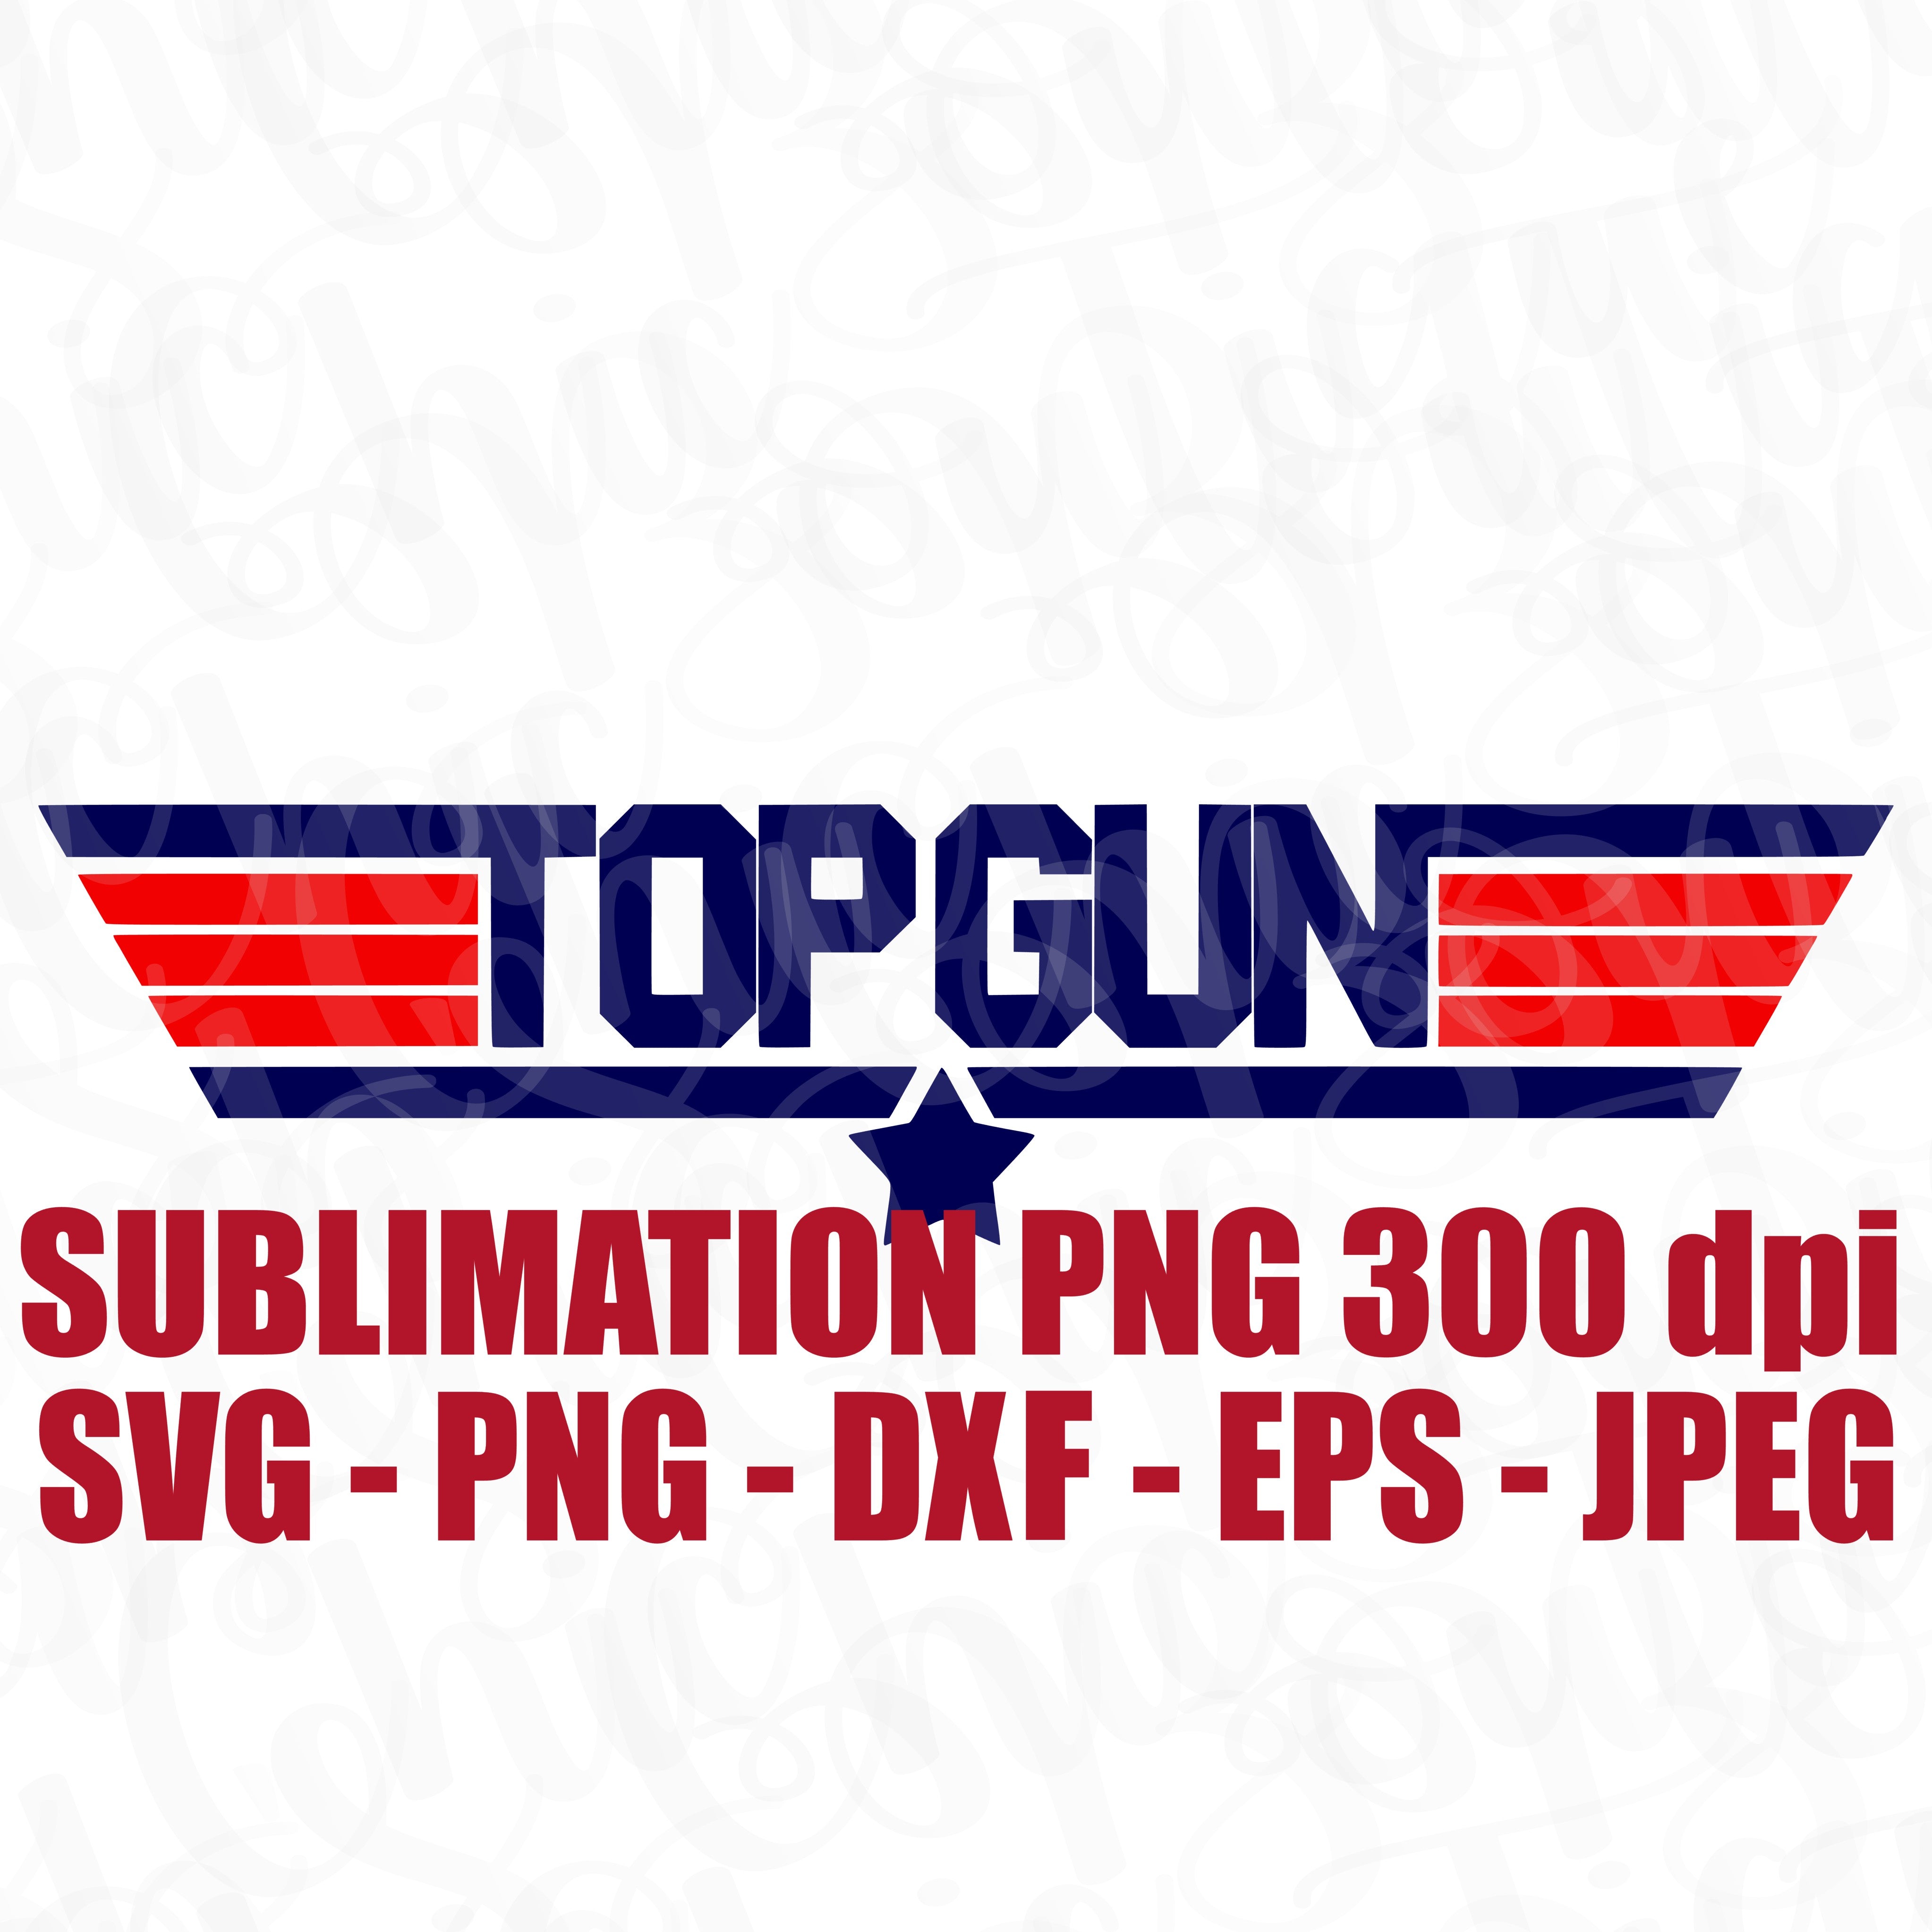 Top Gun Logo Svg Jpeg High Def 300 Dpi Png Dxf Topper Sublimation Desi Tab S Chic Boutique